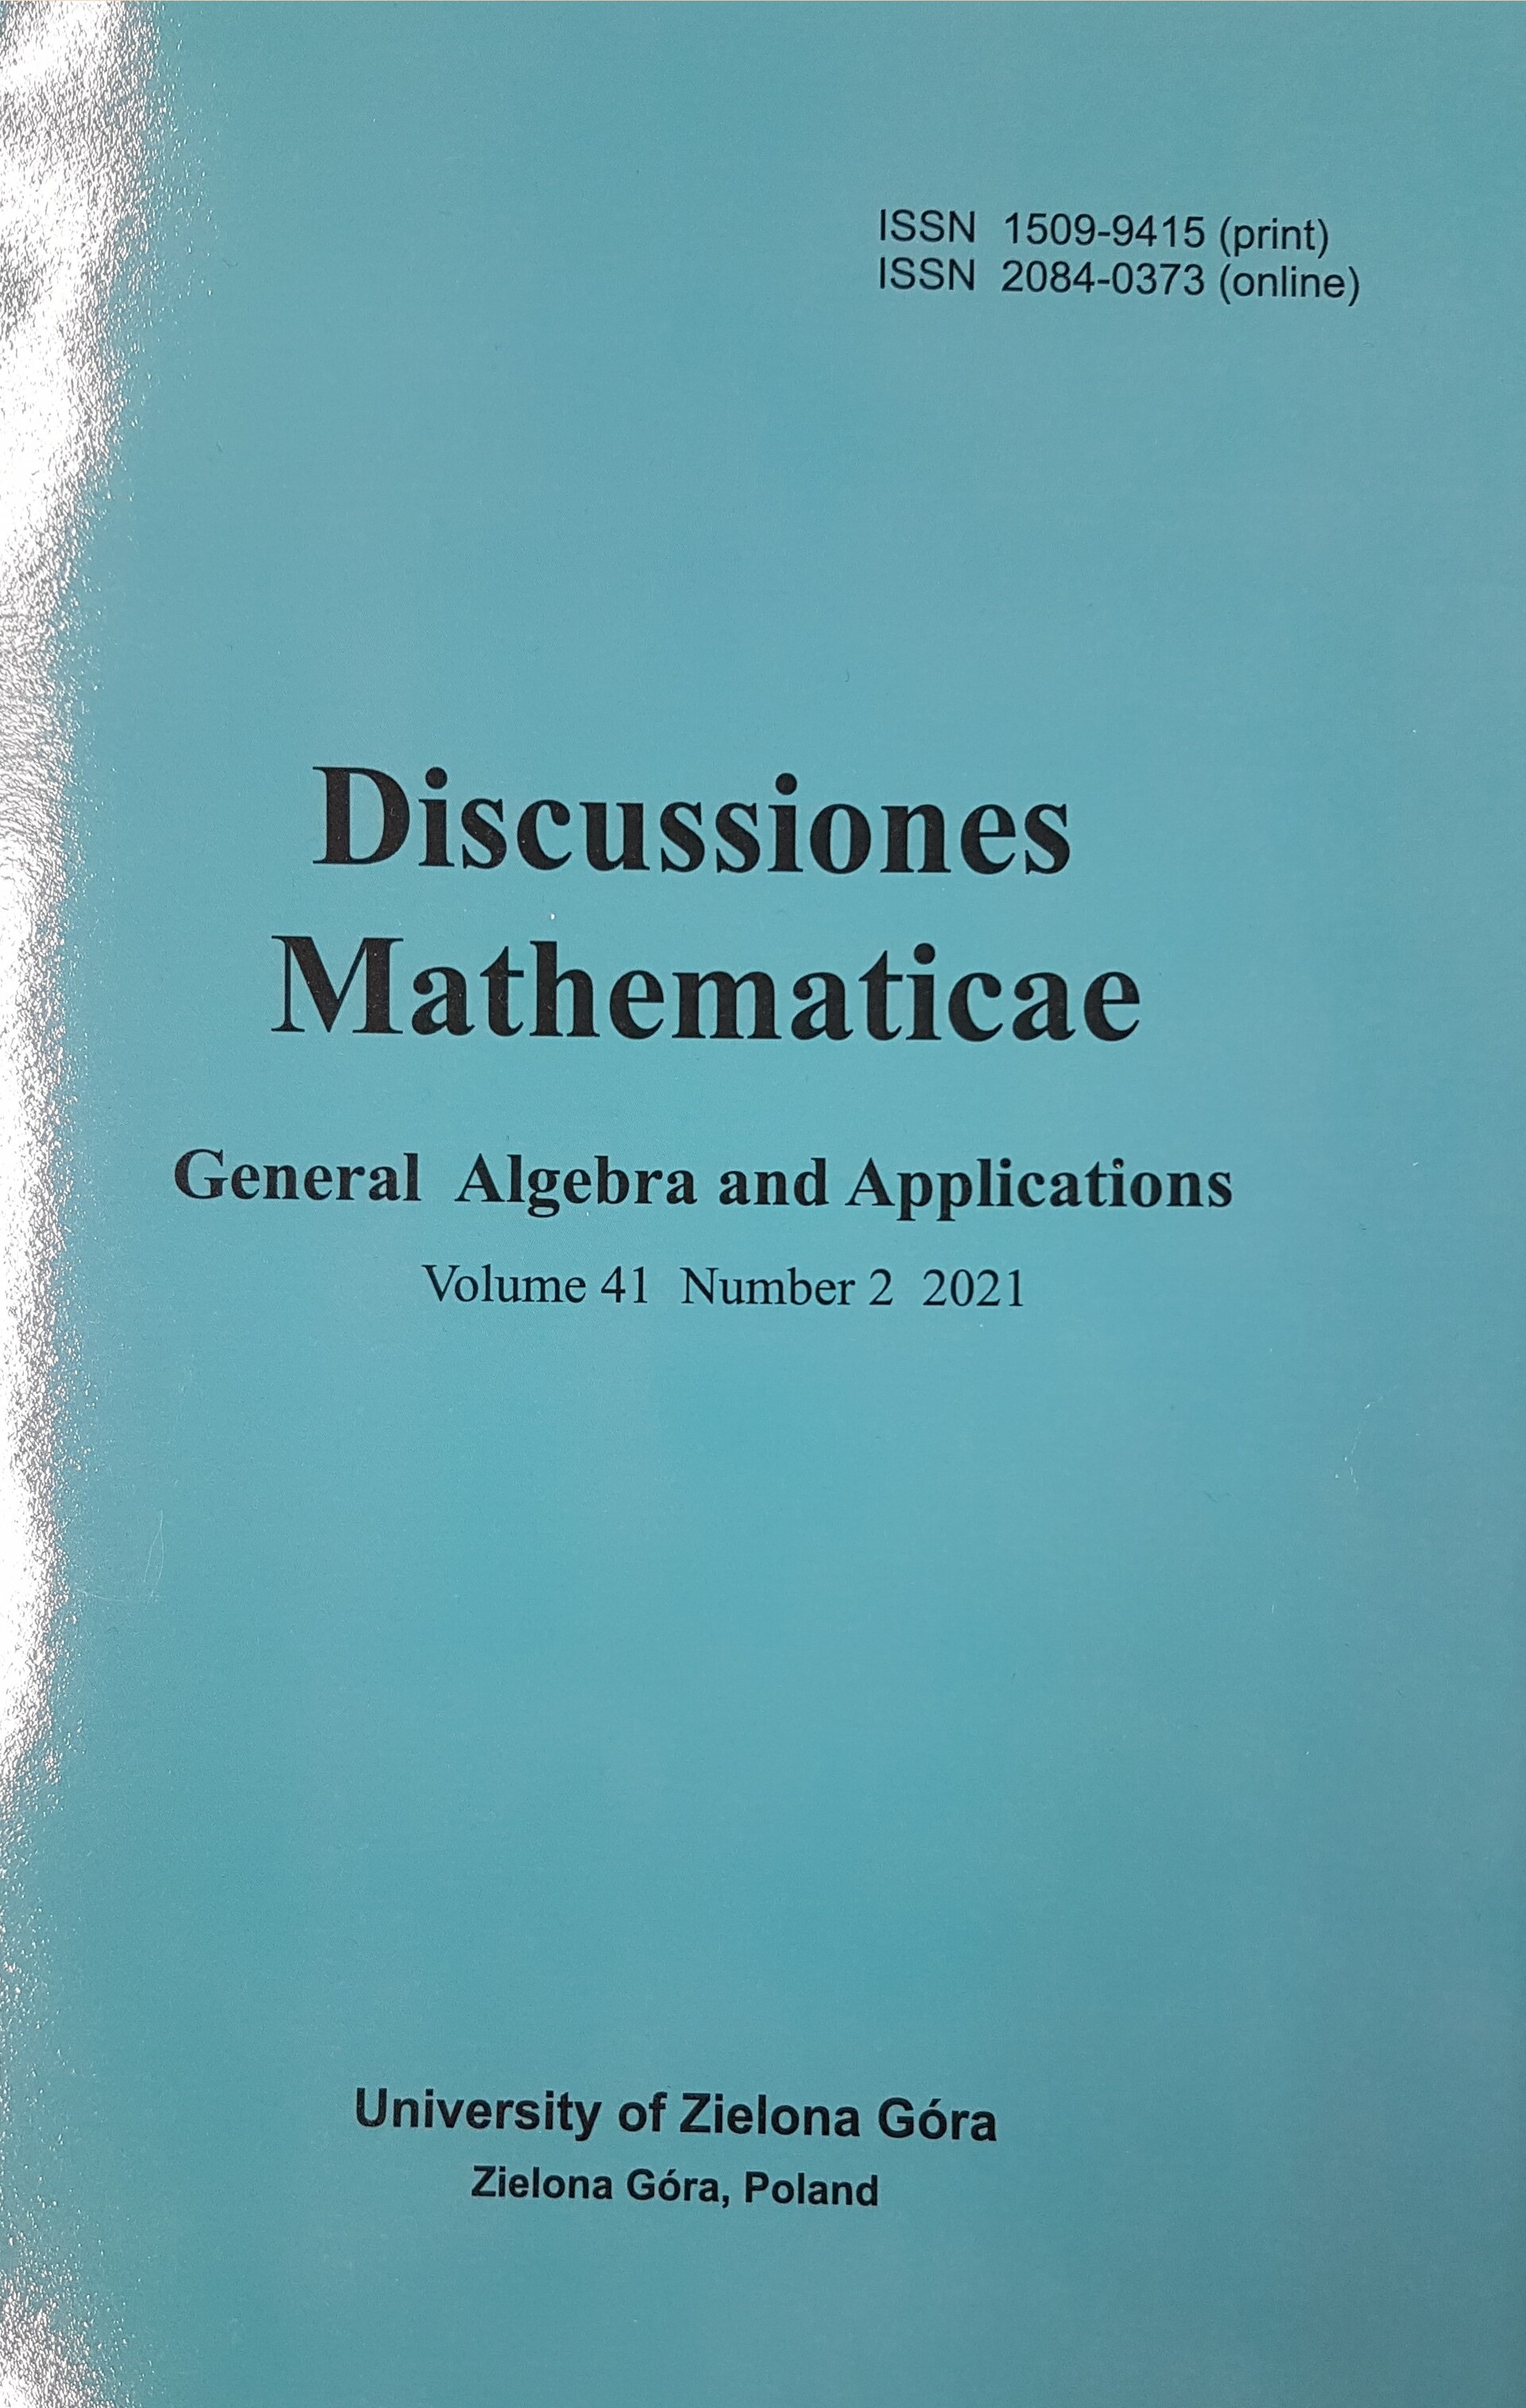 11discussiones_mathematicae_general_algebra_and_applications-1.jpg